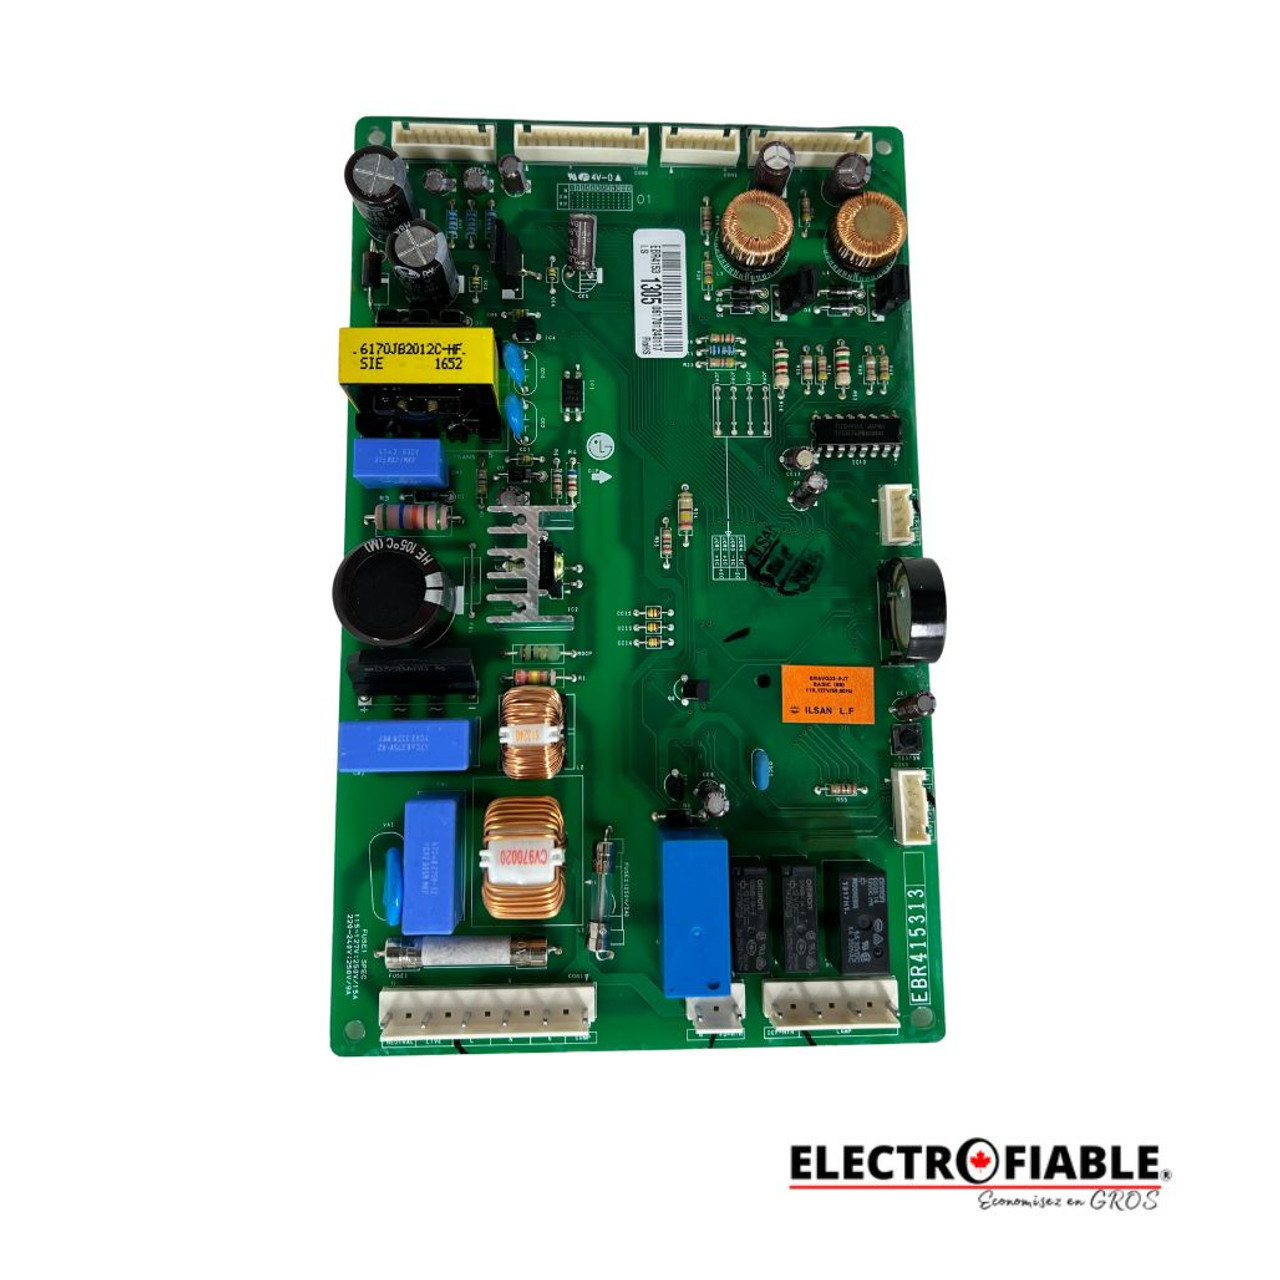 EBR41531305 Refrigerator Main PCB Control Board